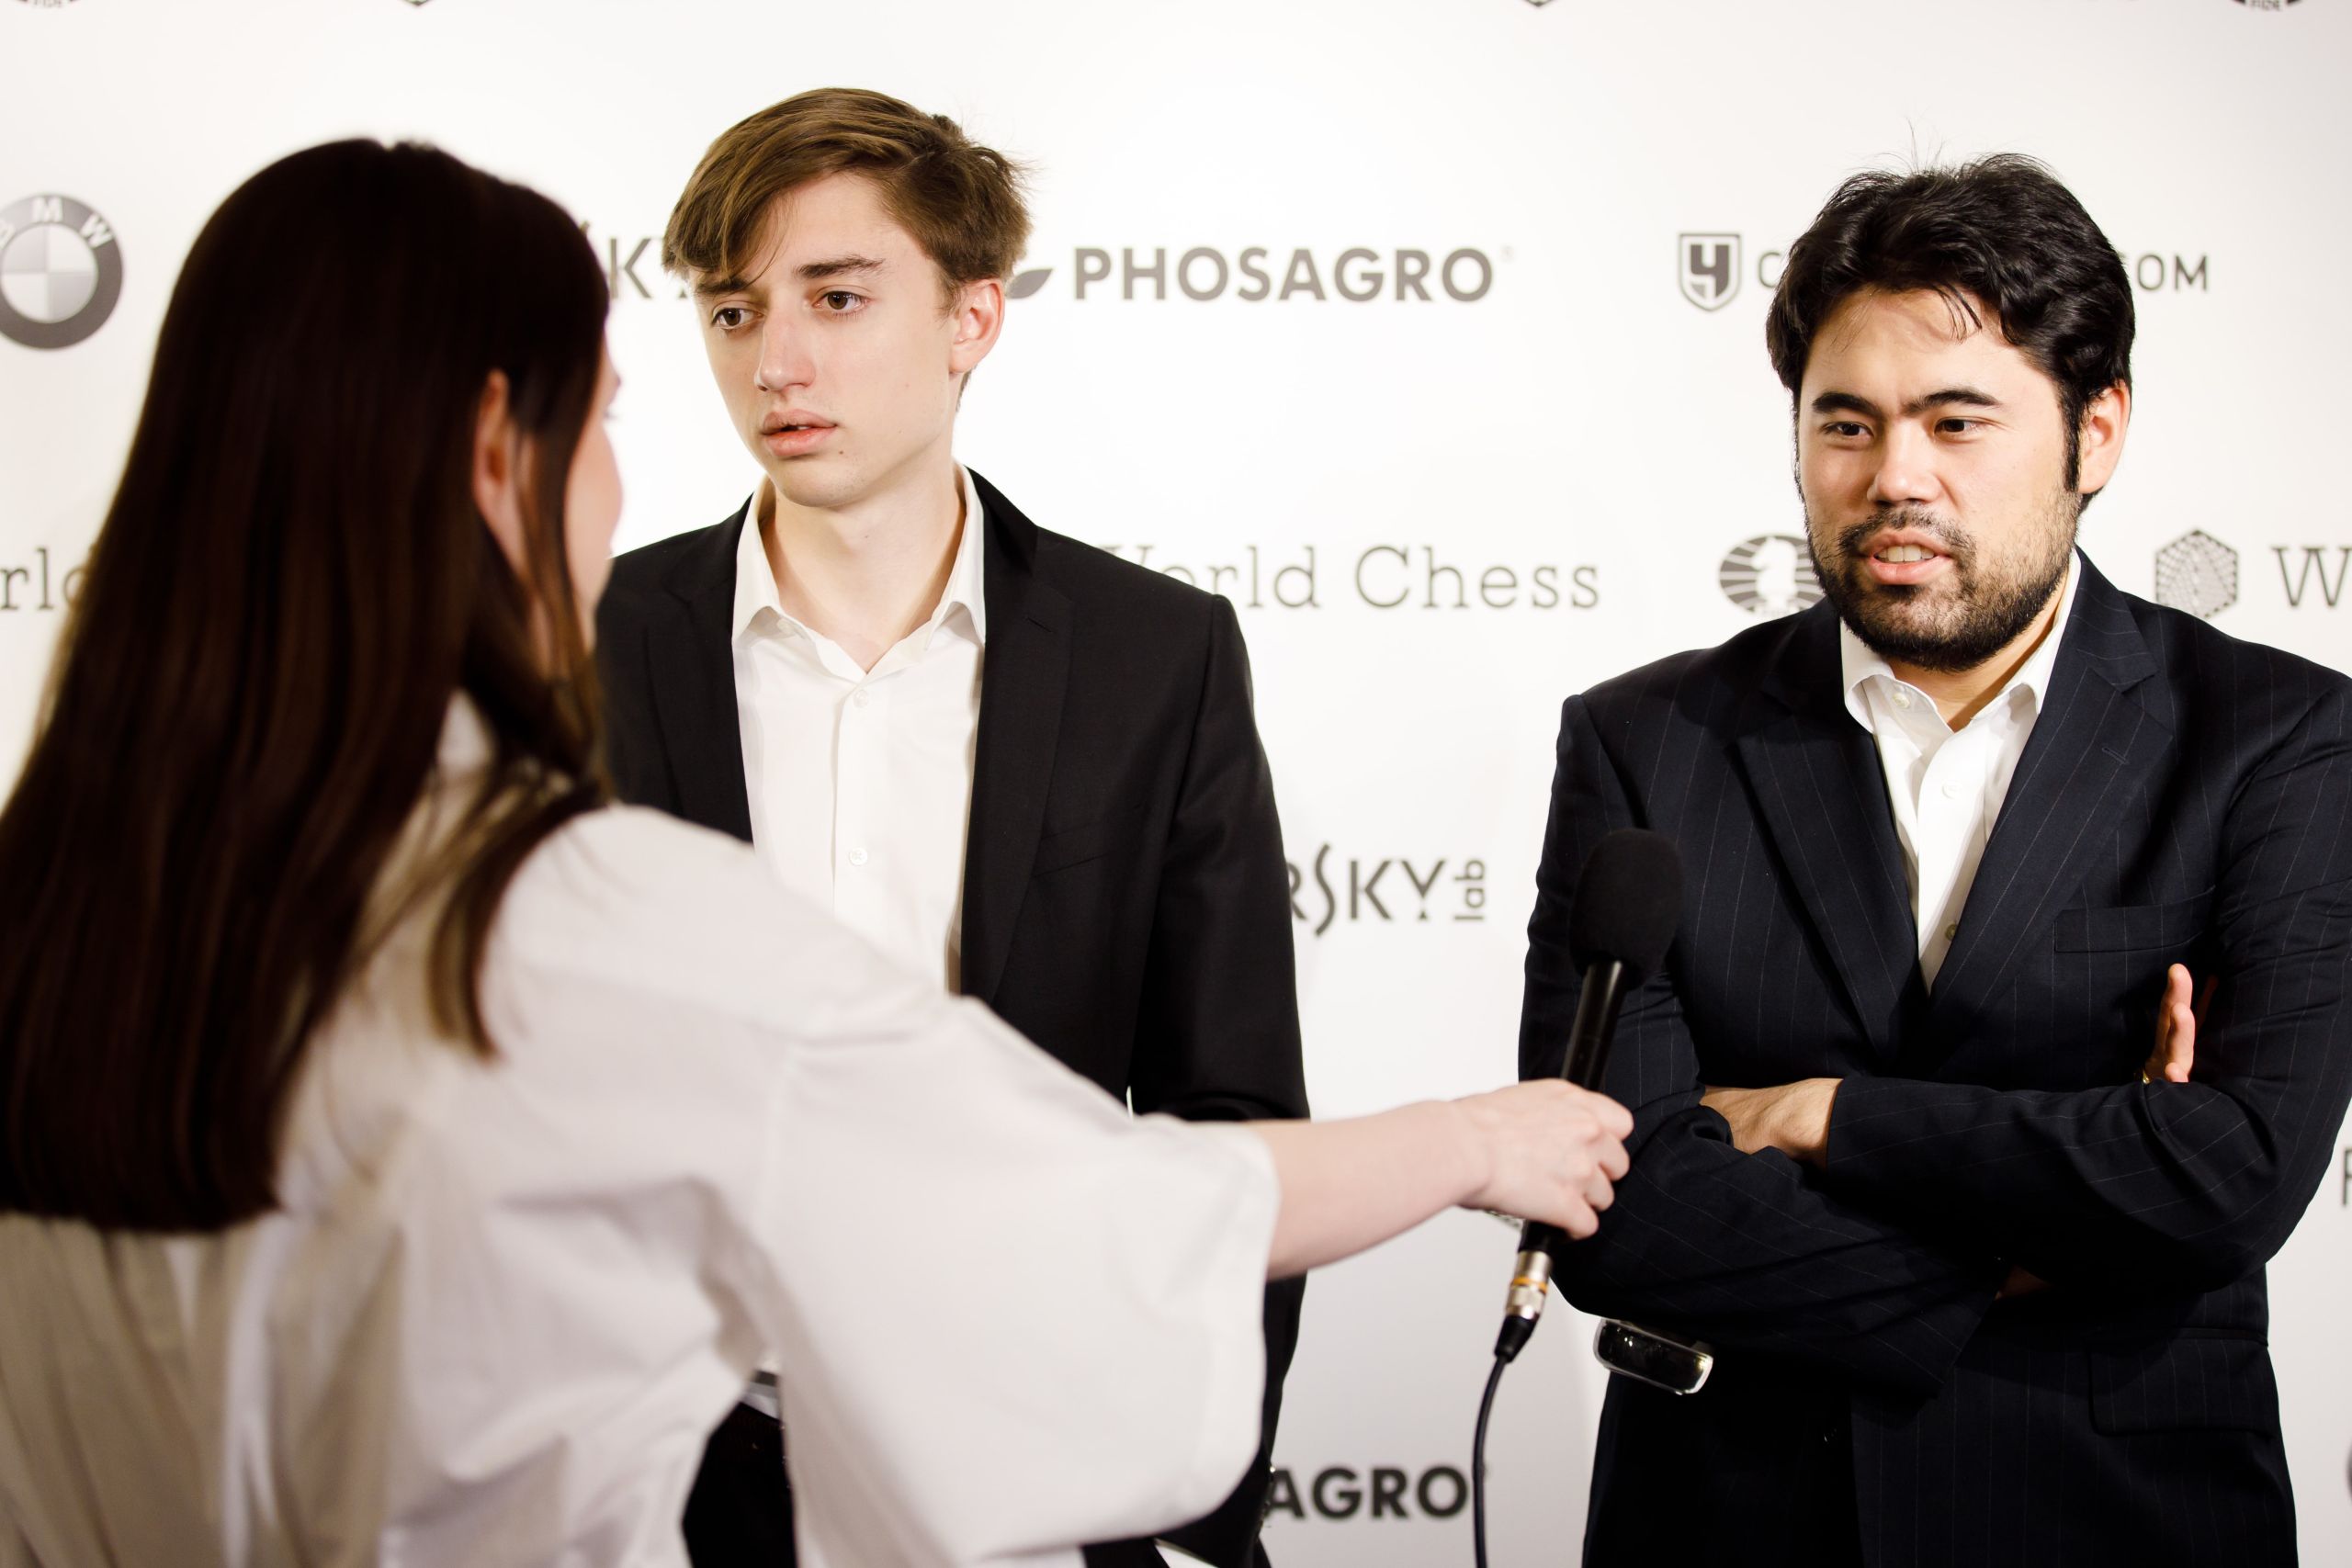 World Chess Nominates Daniil Dubov to the Grand Prix Series; Fears